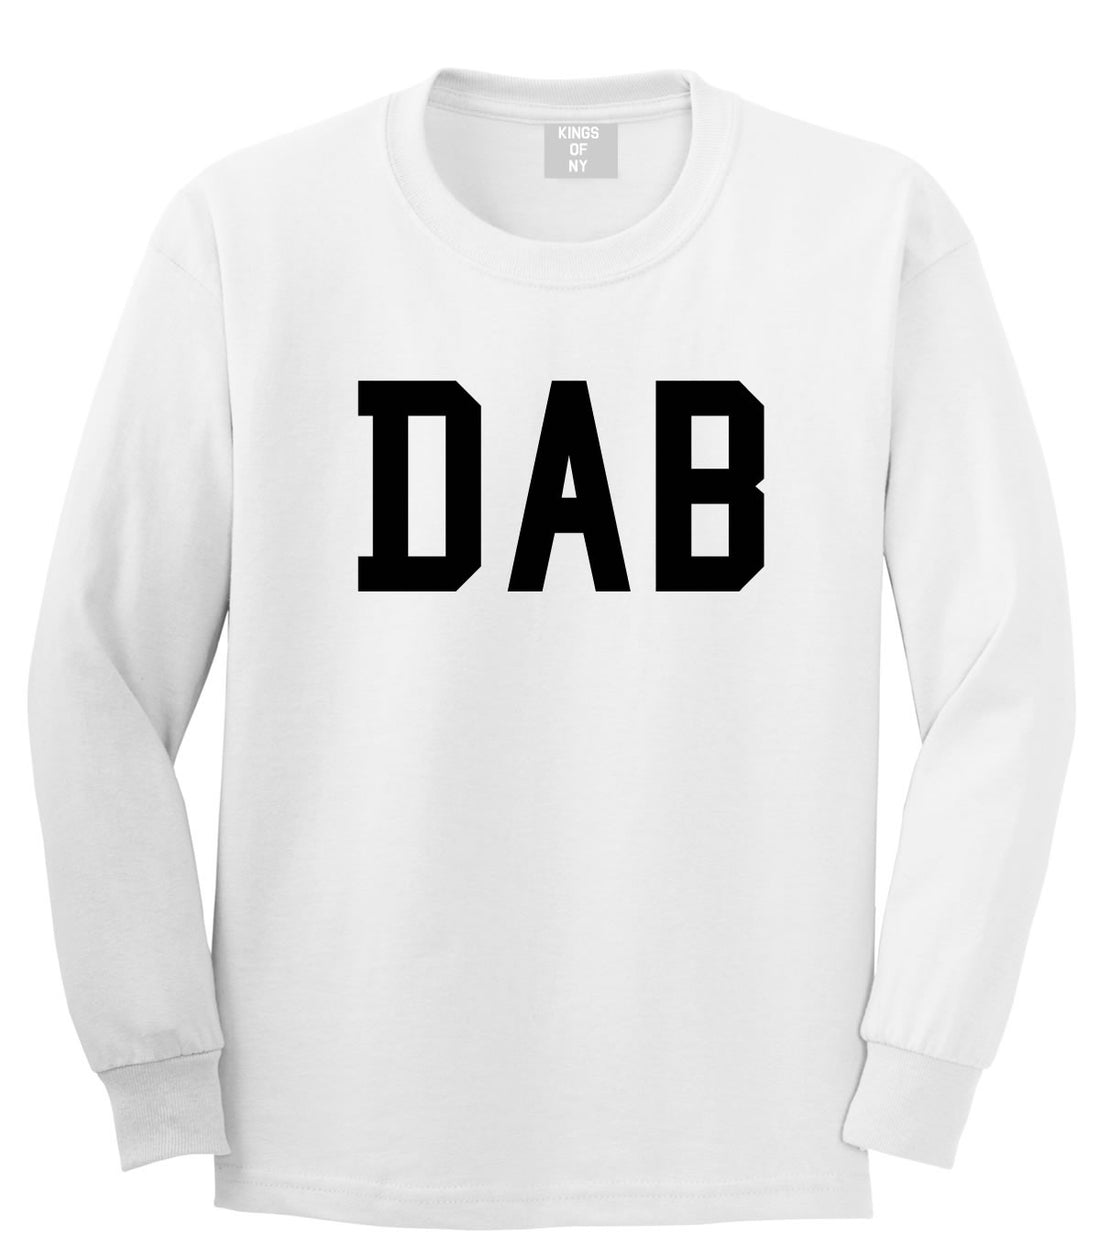 Dab Long Sleeve T-Shirt by Kings Of NY